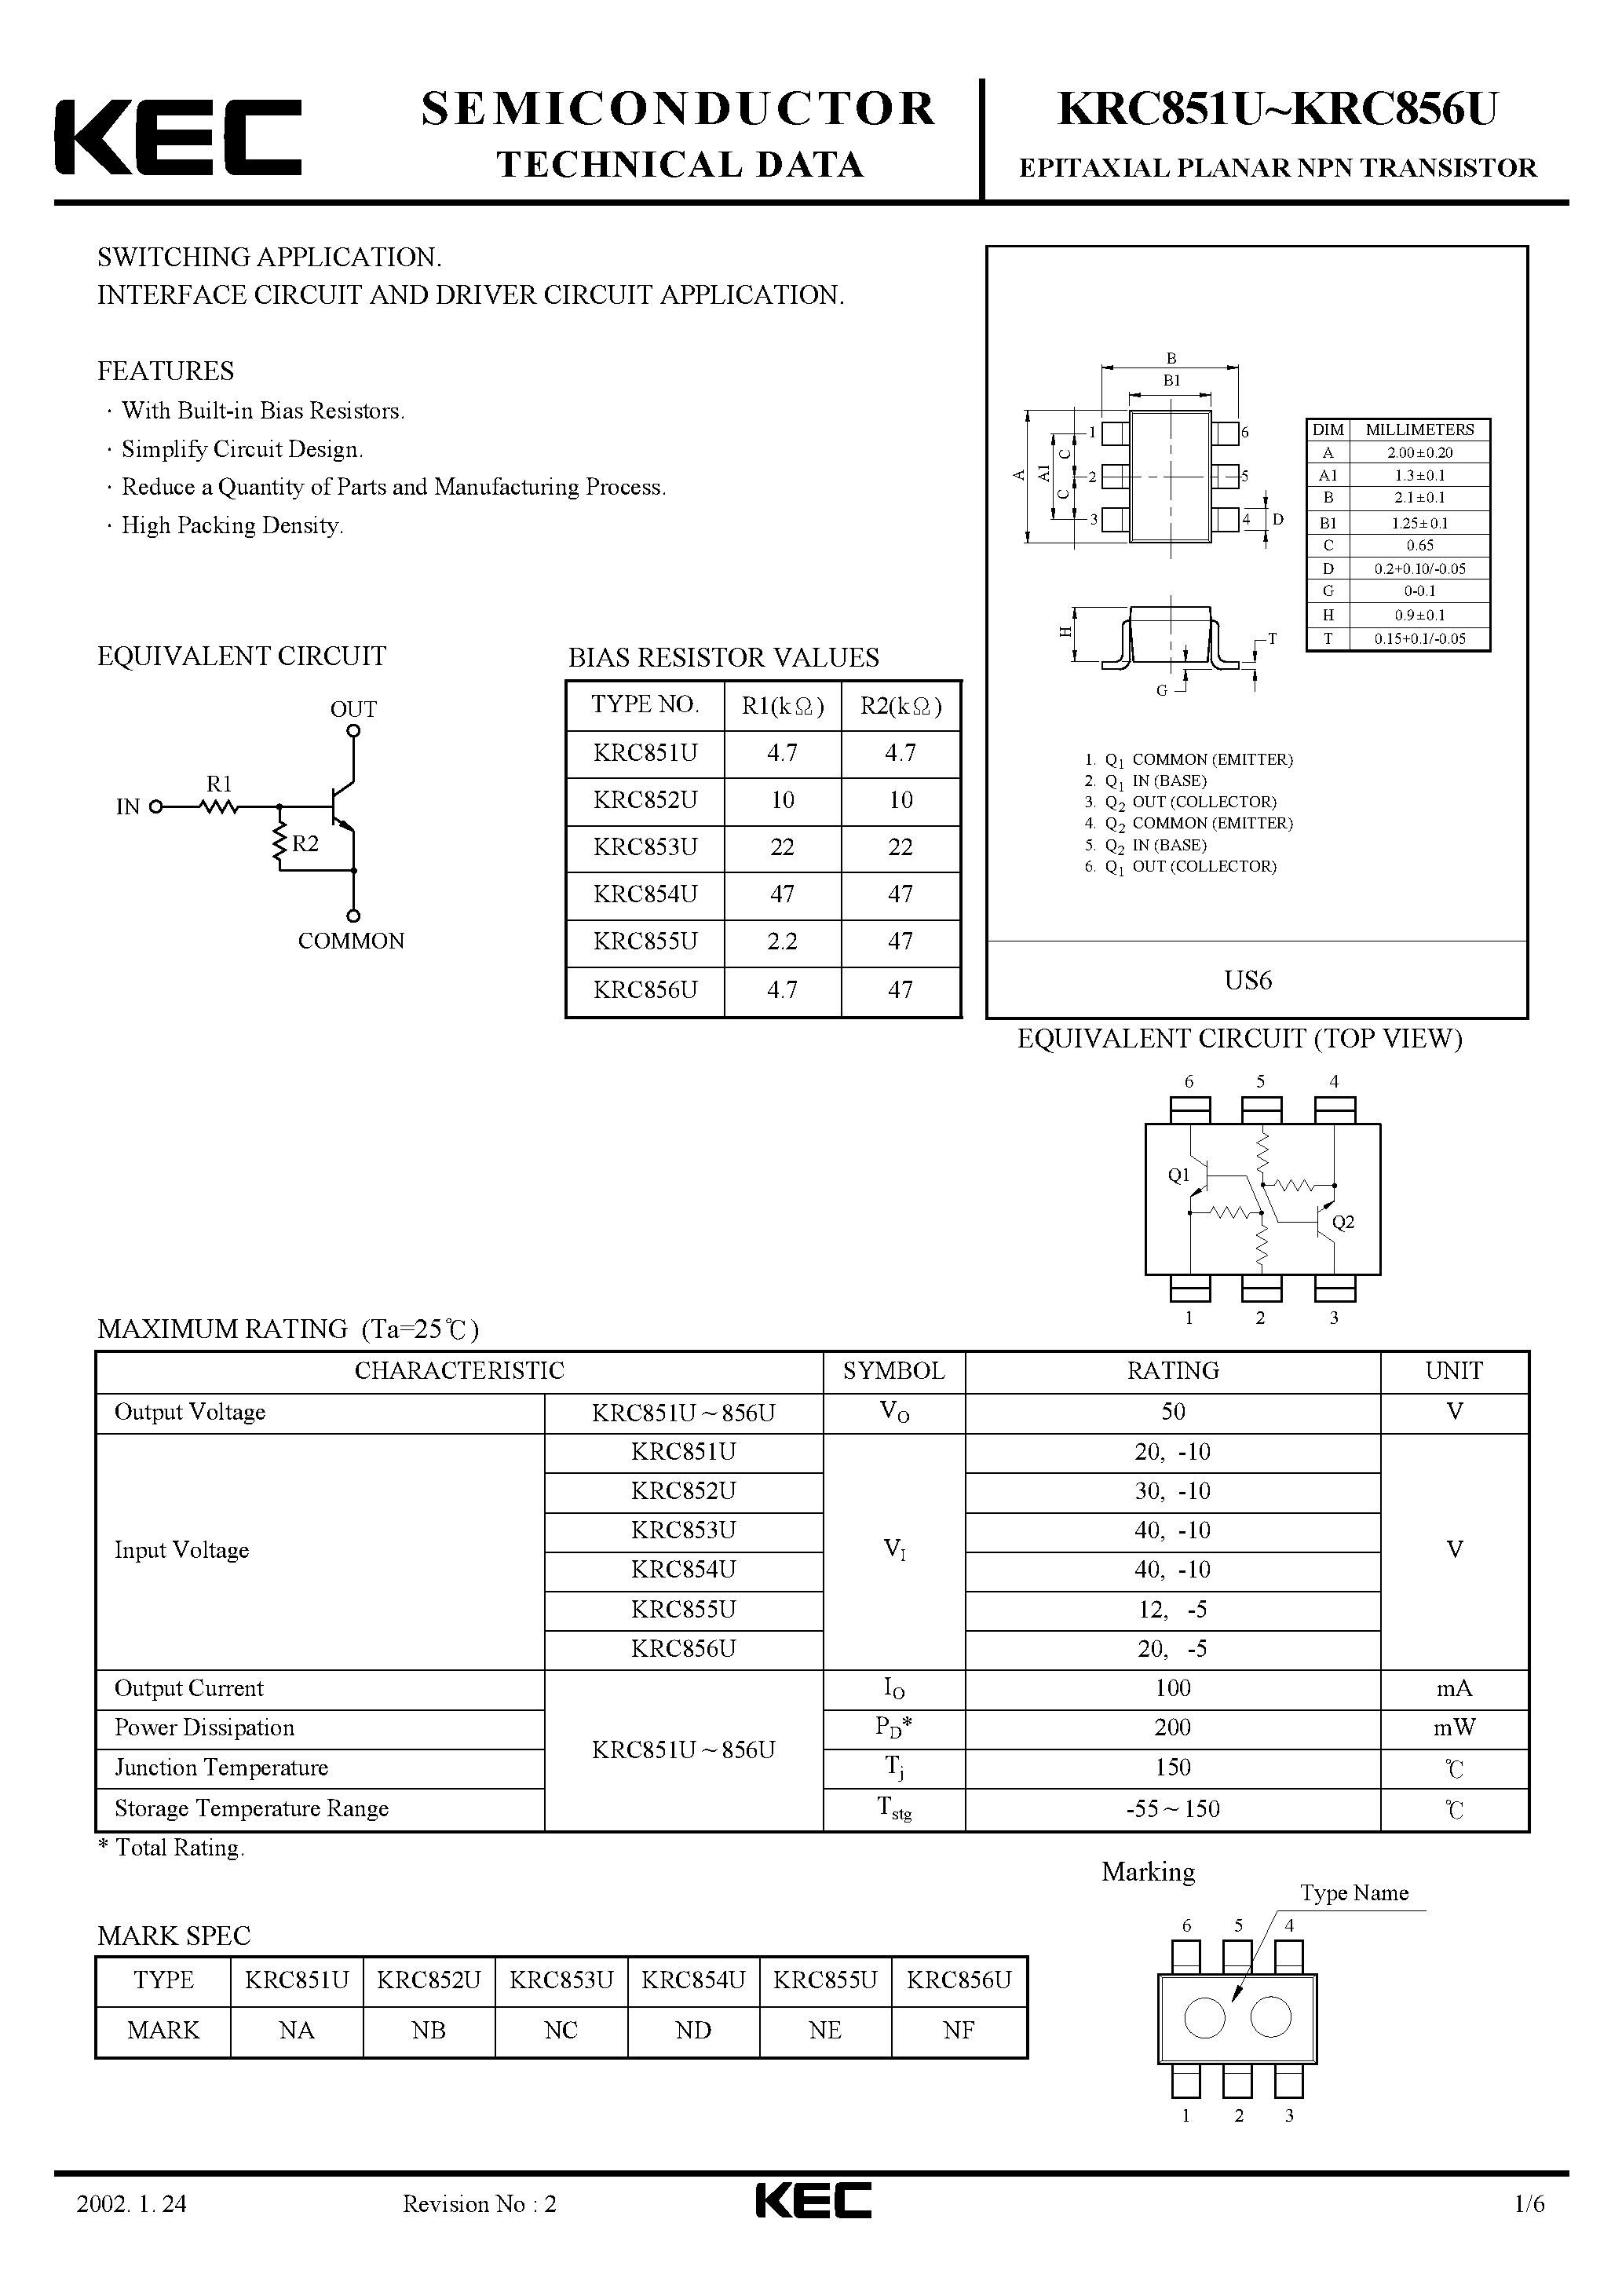 Datasheet KRC851U - (KRC851U - KRC856U) EPITAXIAL PLANAR NPN TRANSISTOR page 1